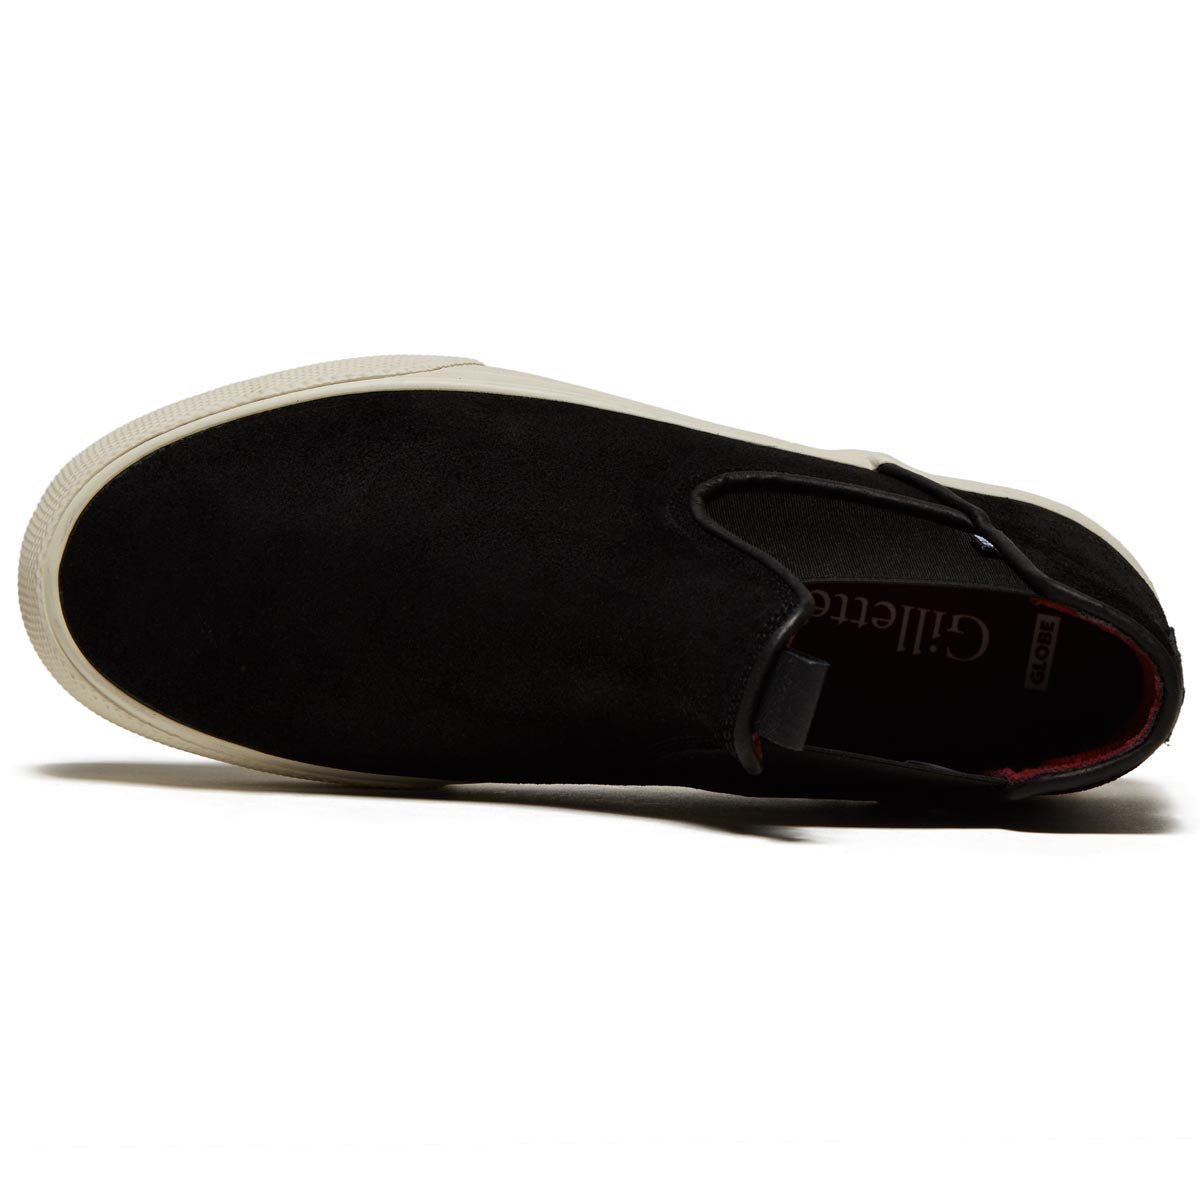 Globe Dover Shoes - Black/Cream/Gillette image 3